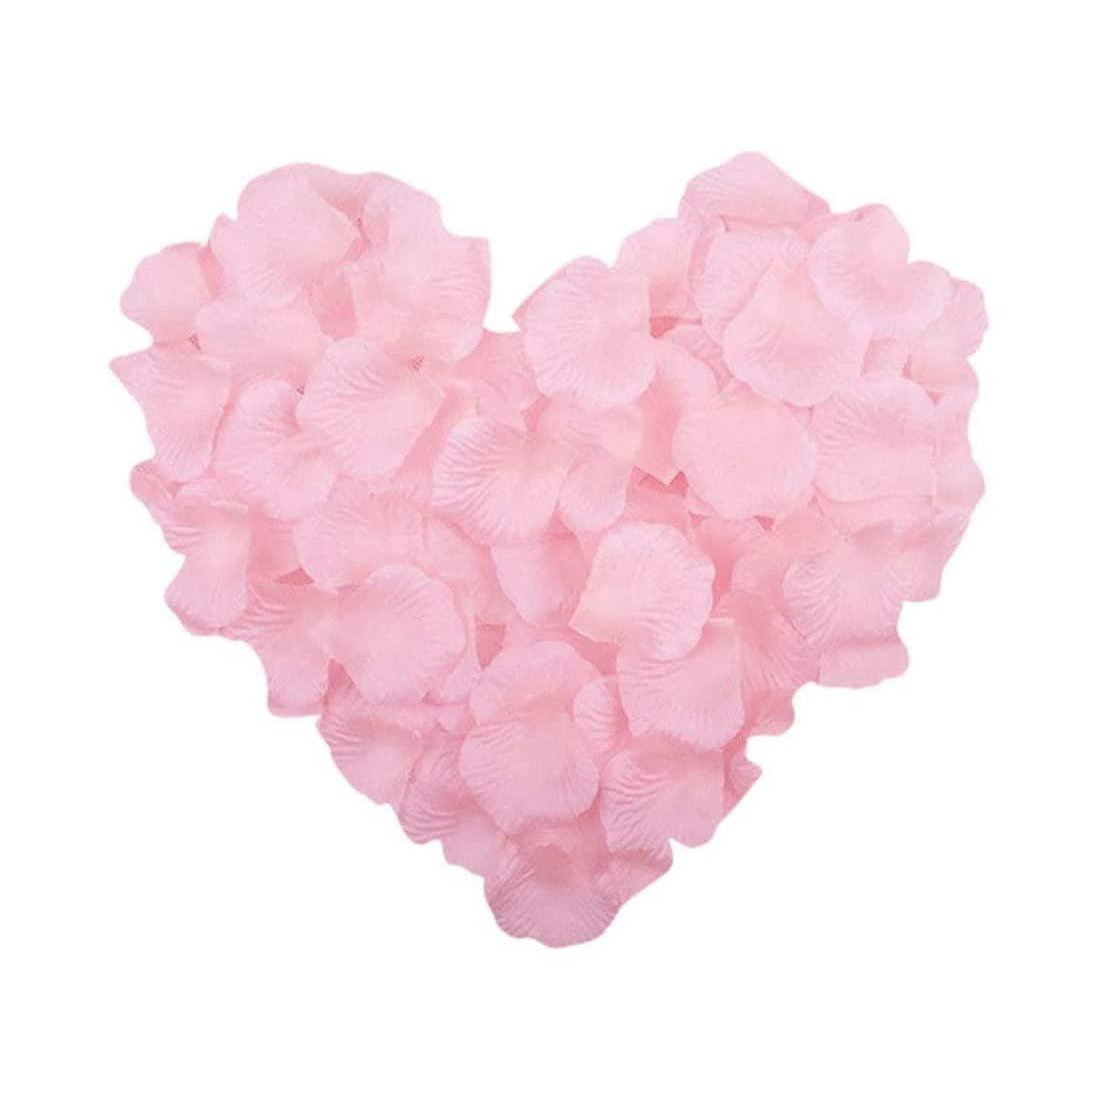 500pcs Light Pink Silk Rose Petals Wedding Mothers Day Wedding Confetti Anniversary Table Decorations - image 1